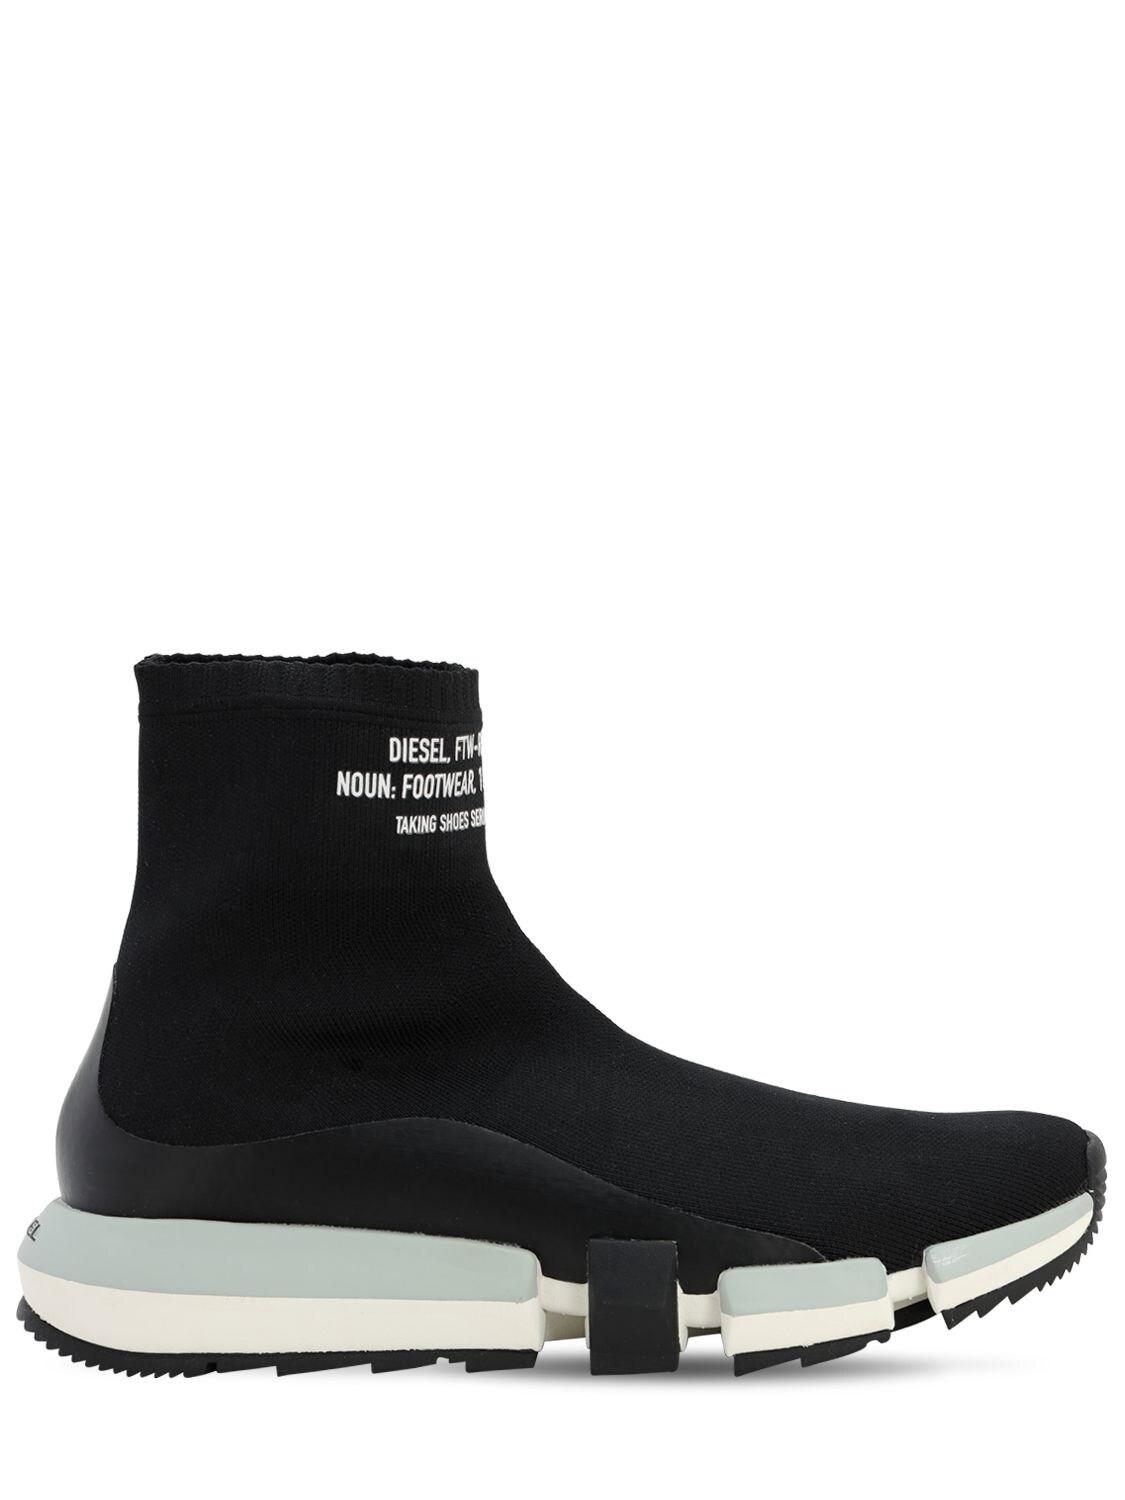 DIESEL Techno Knit Sock Sneakers in Black for Men - Save 20% - Lyst